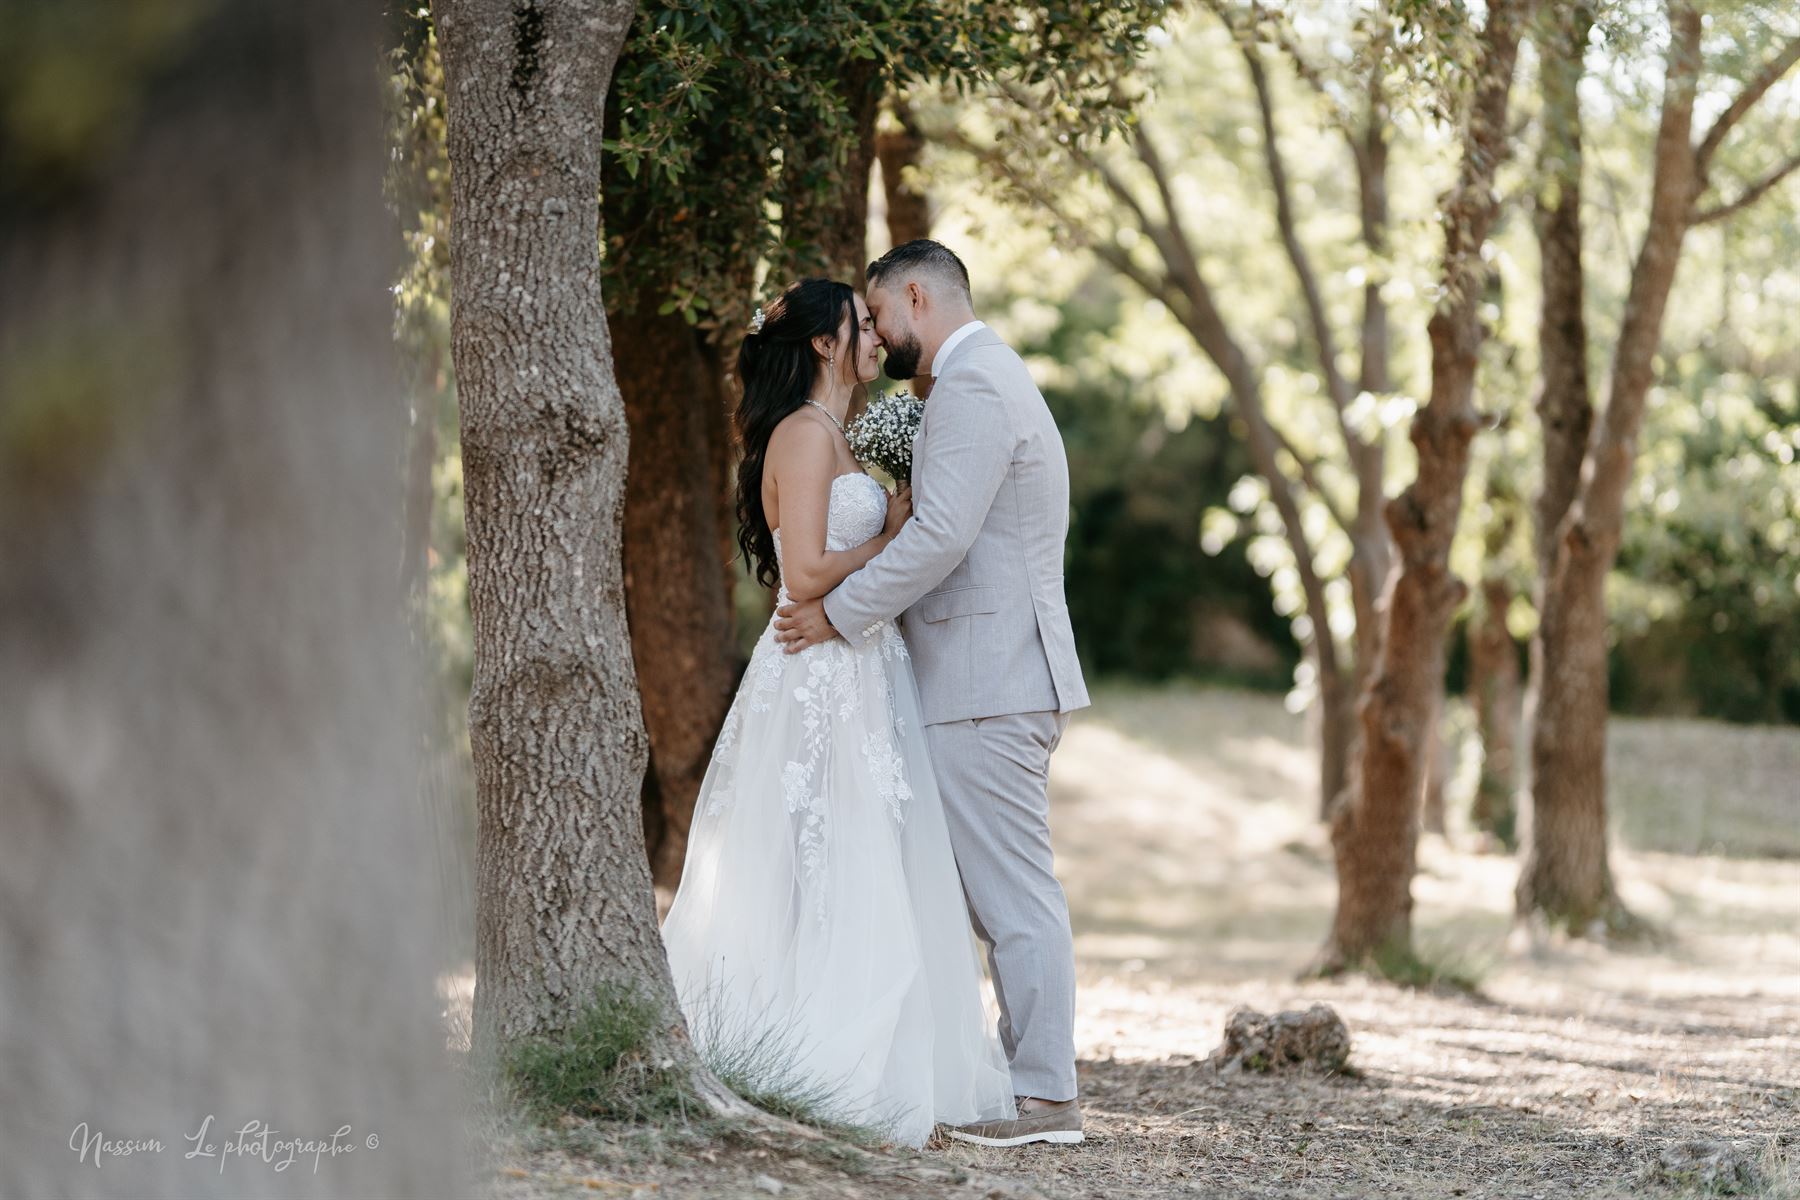 Wedding Photographer Aix en Provence: Capturing Love's Embrace 12